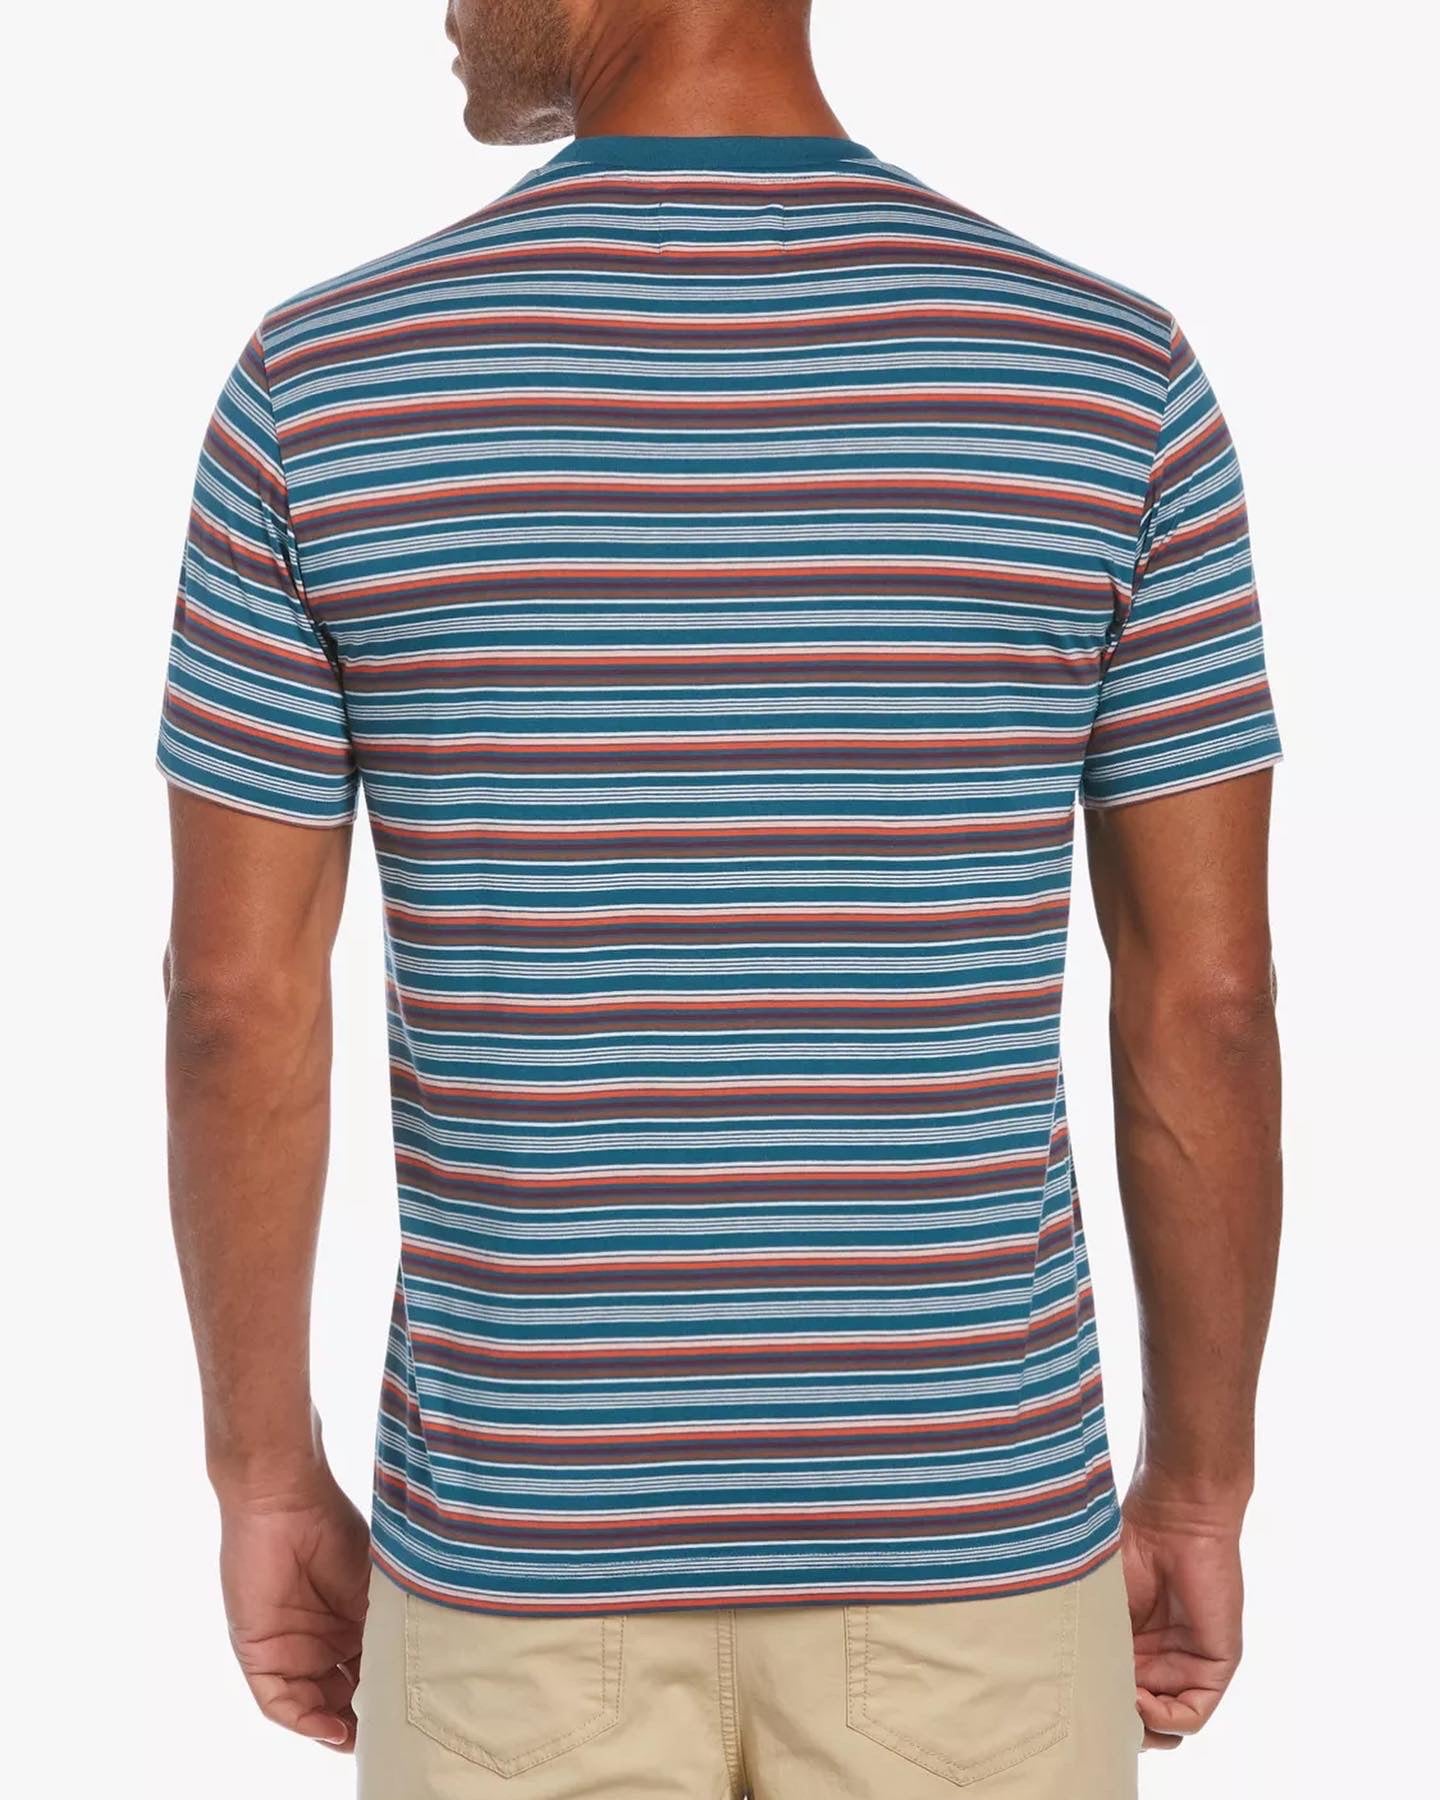 Original Penguin Narrow Stripe Short Sleeve Crew Neck T-Shirt, Blue Coral